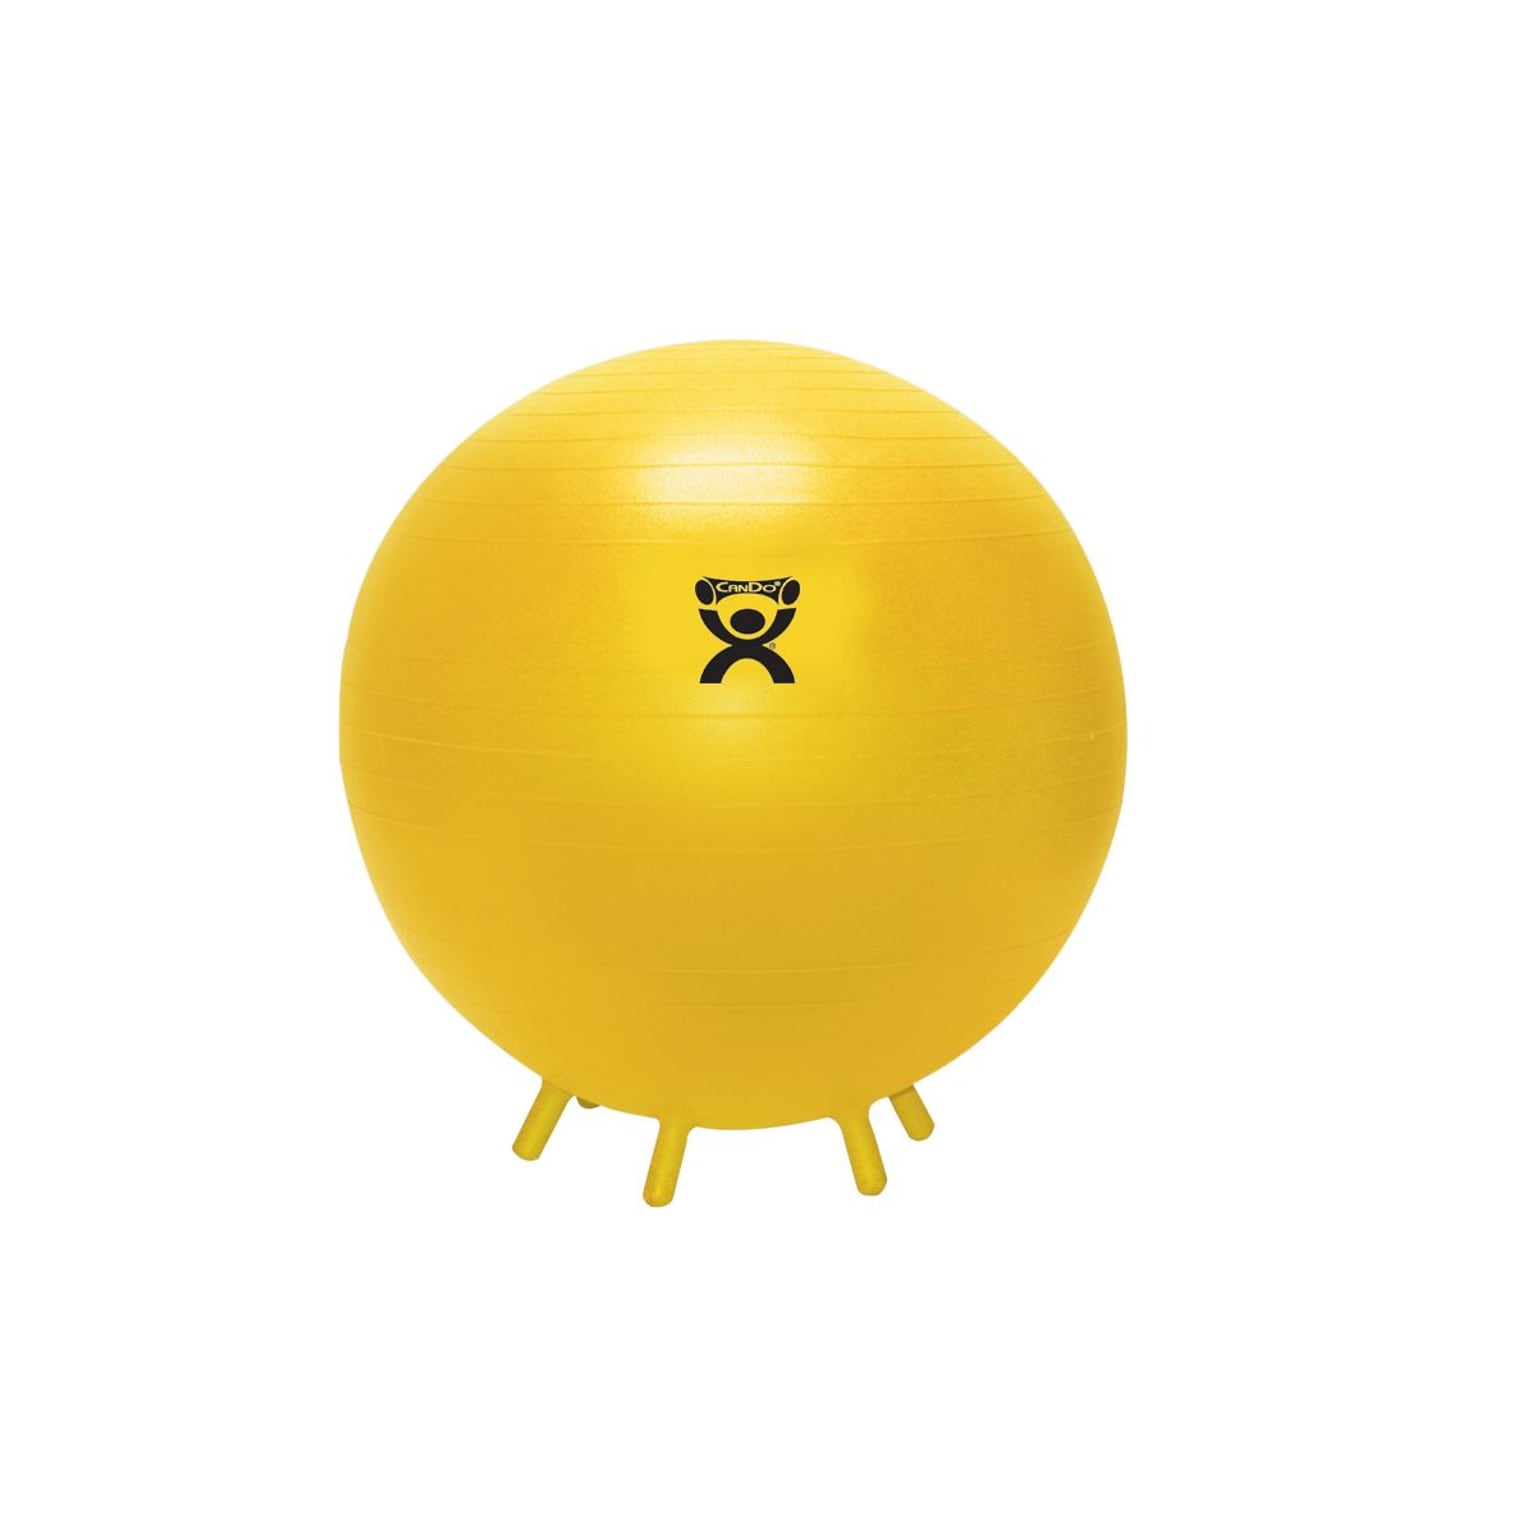 Cando 45 cm (17.7) Feet-Ball Inflatable Ball, Yellow